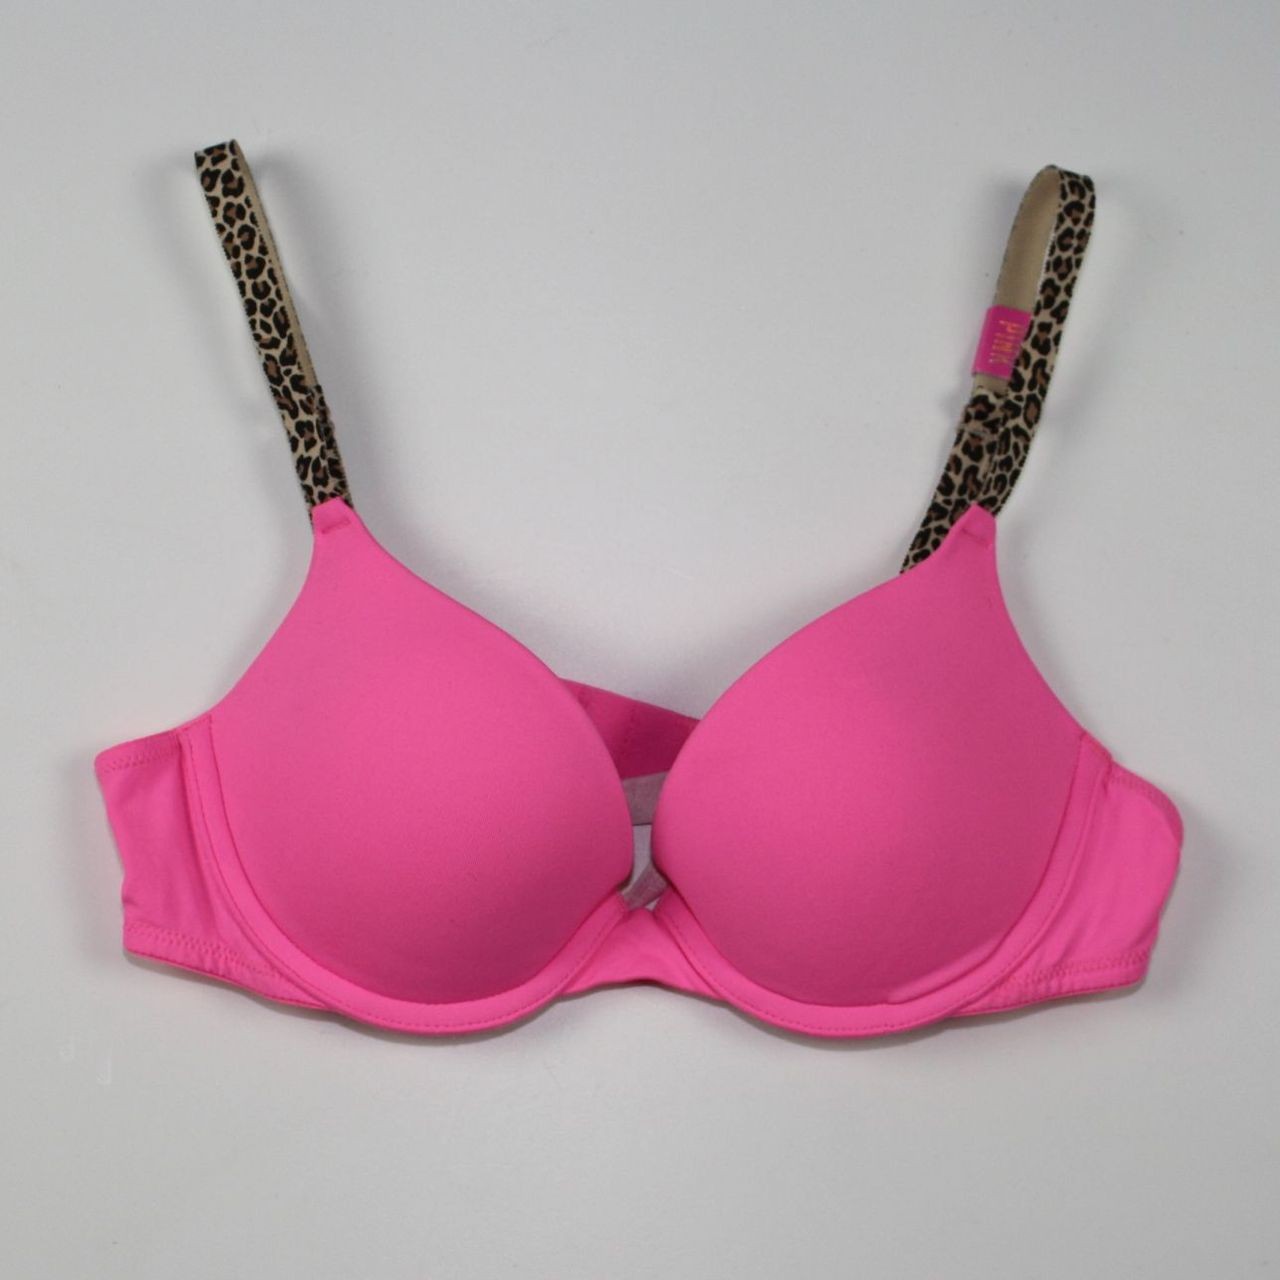 Victoria's Secret Pink By Victoria's Secret Date Push Up Bra Size